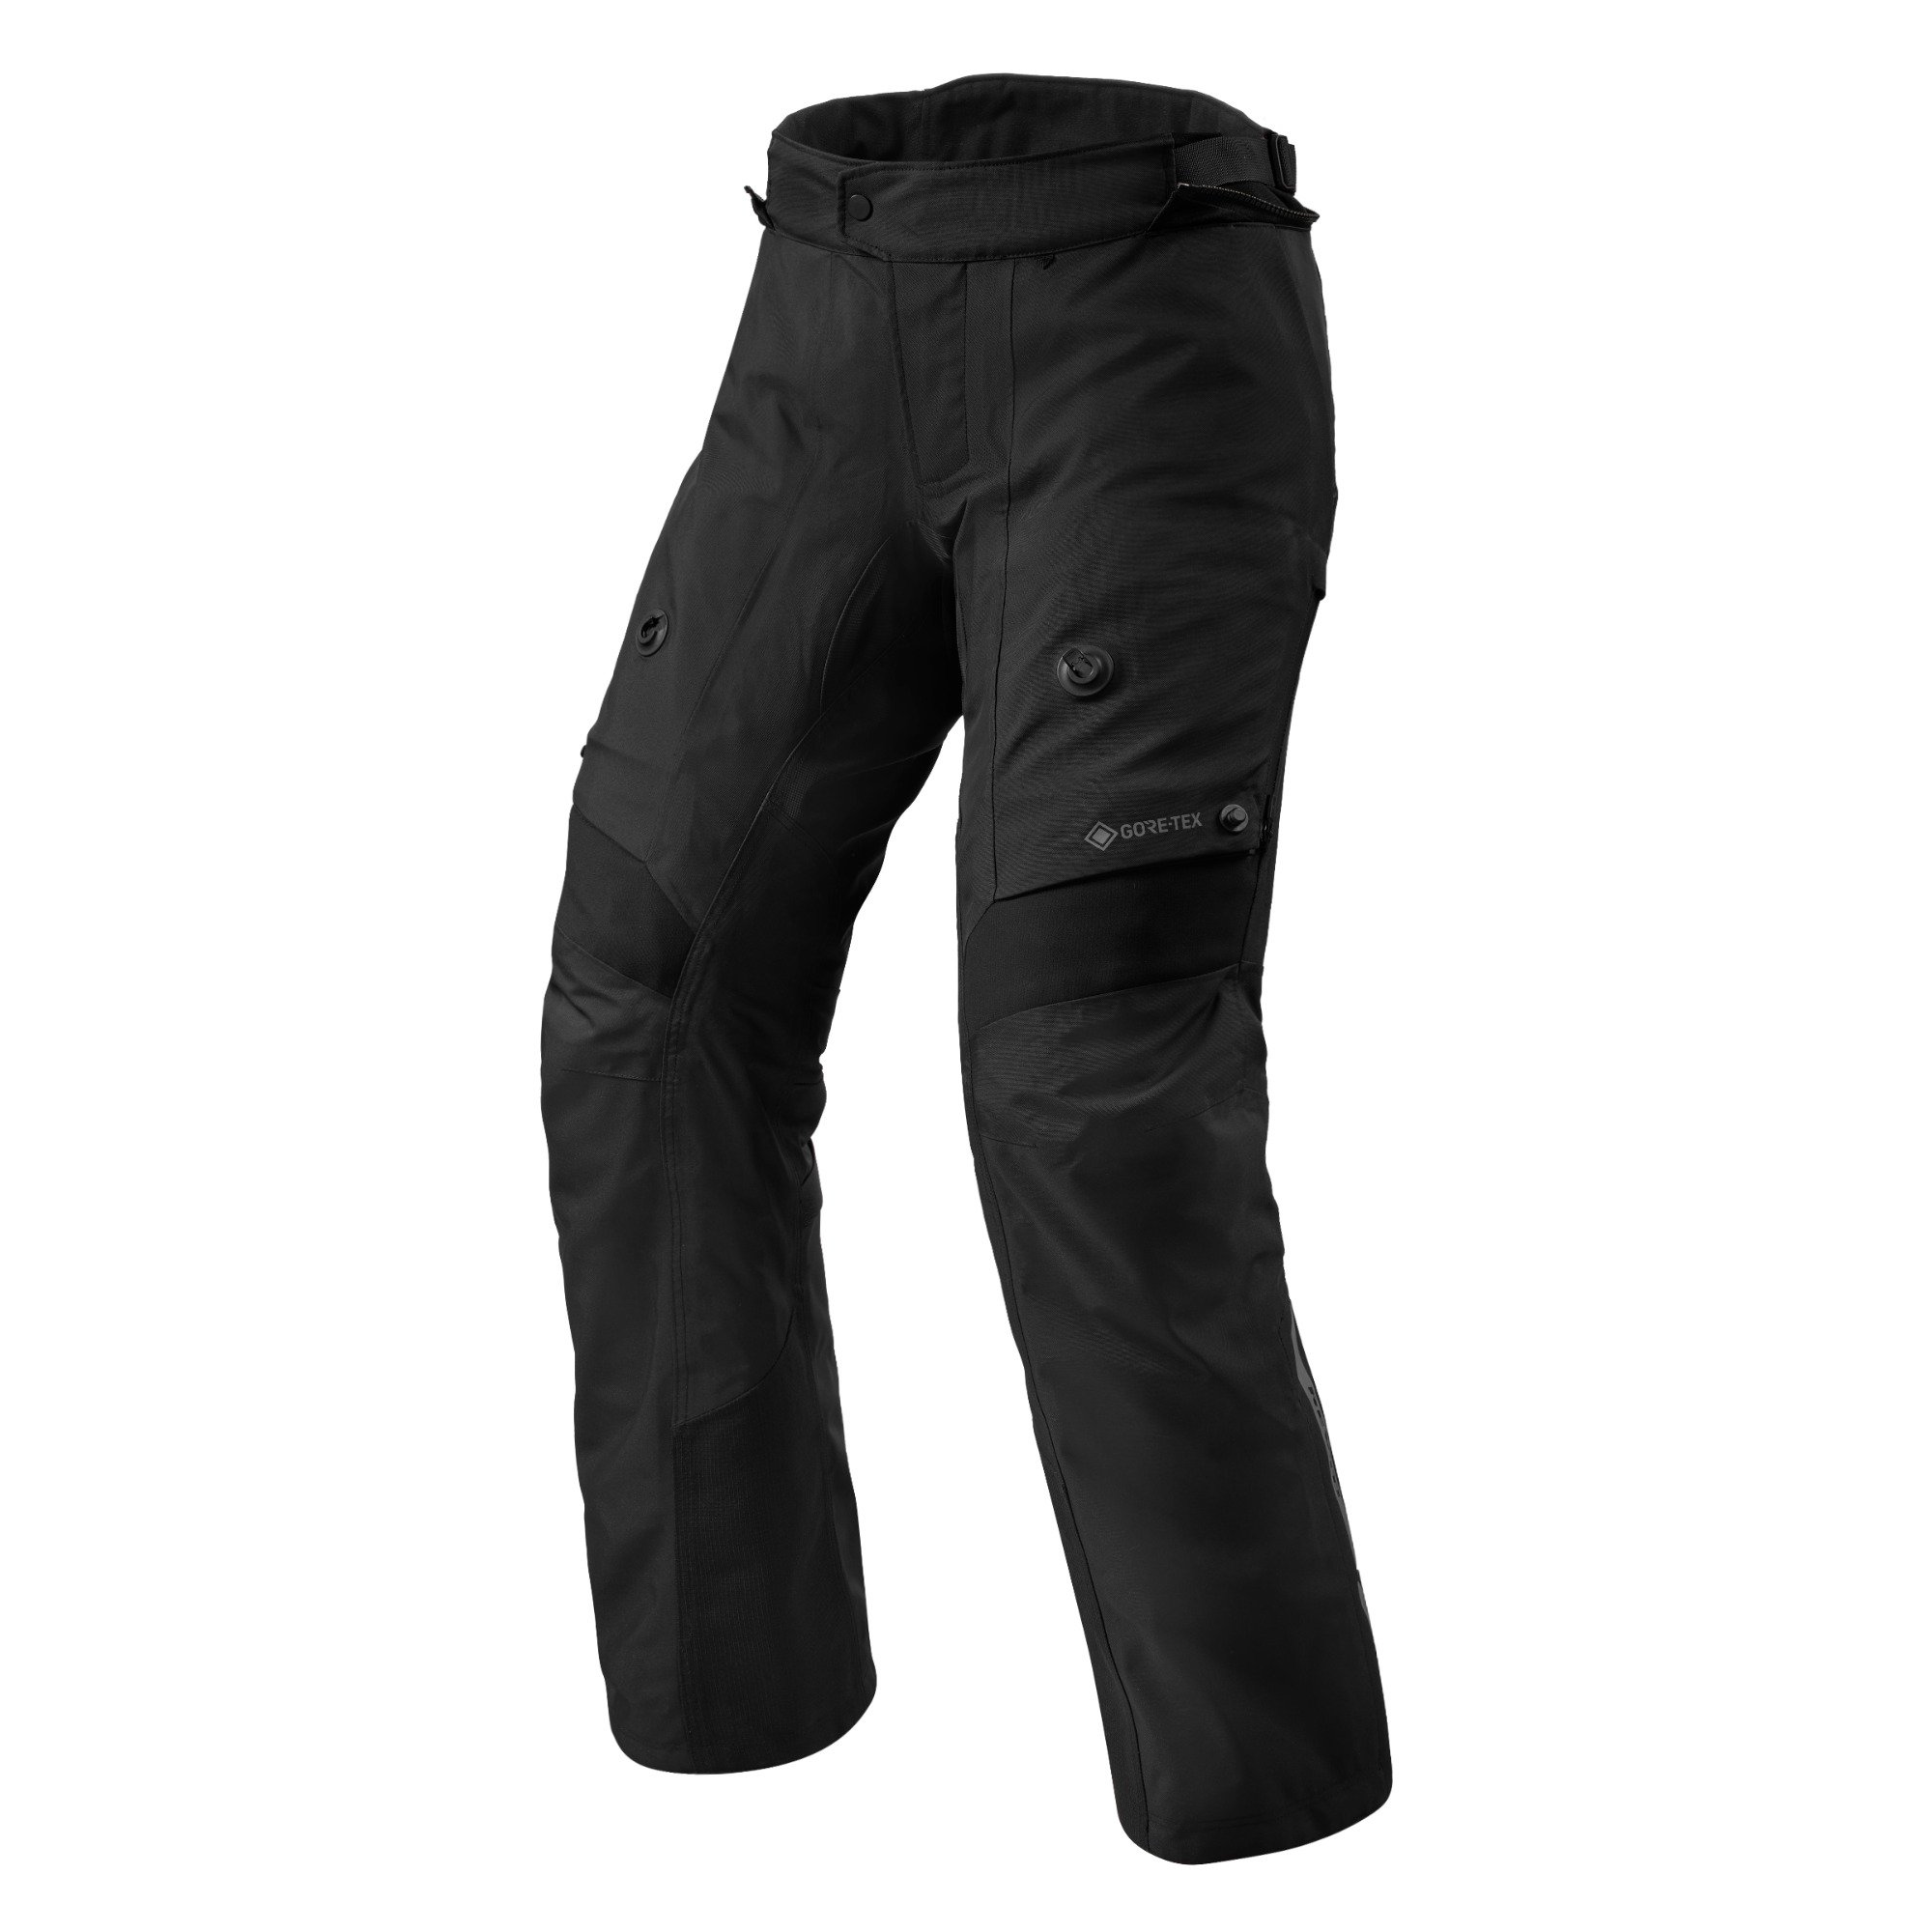 Image of REV'IT! Pants Poseidon 3 GTX Black Standard Motorcycle Pants Size S EN